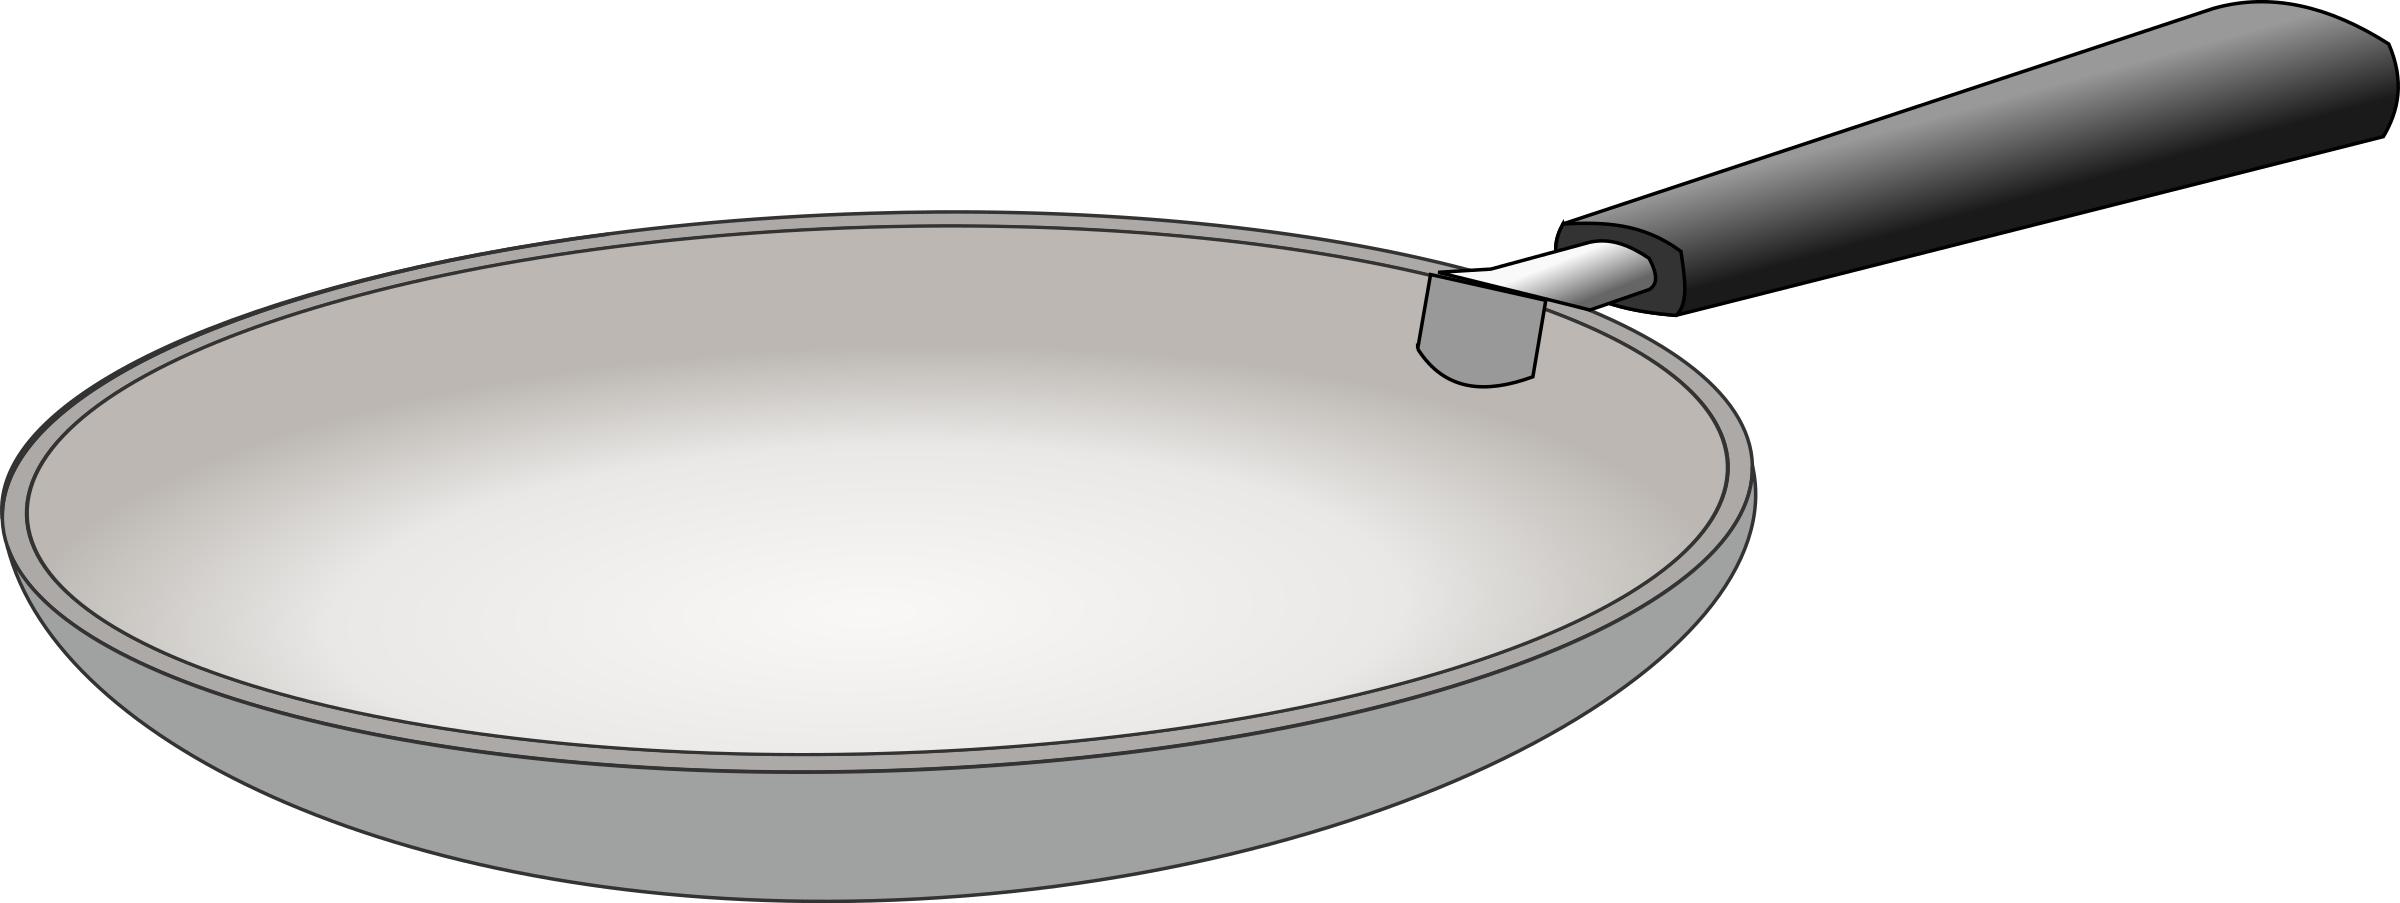 padella - frying pan png